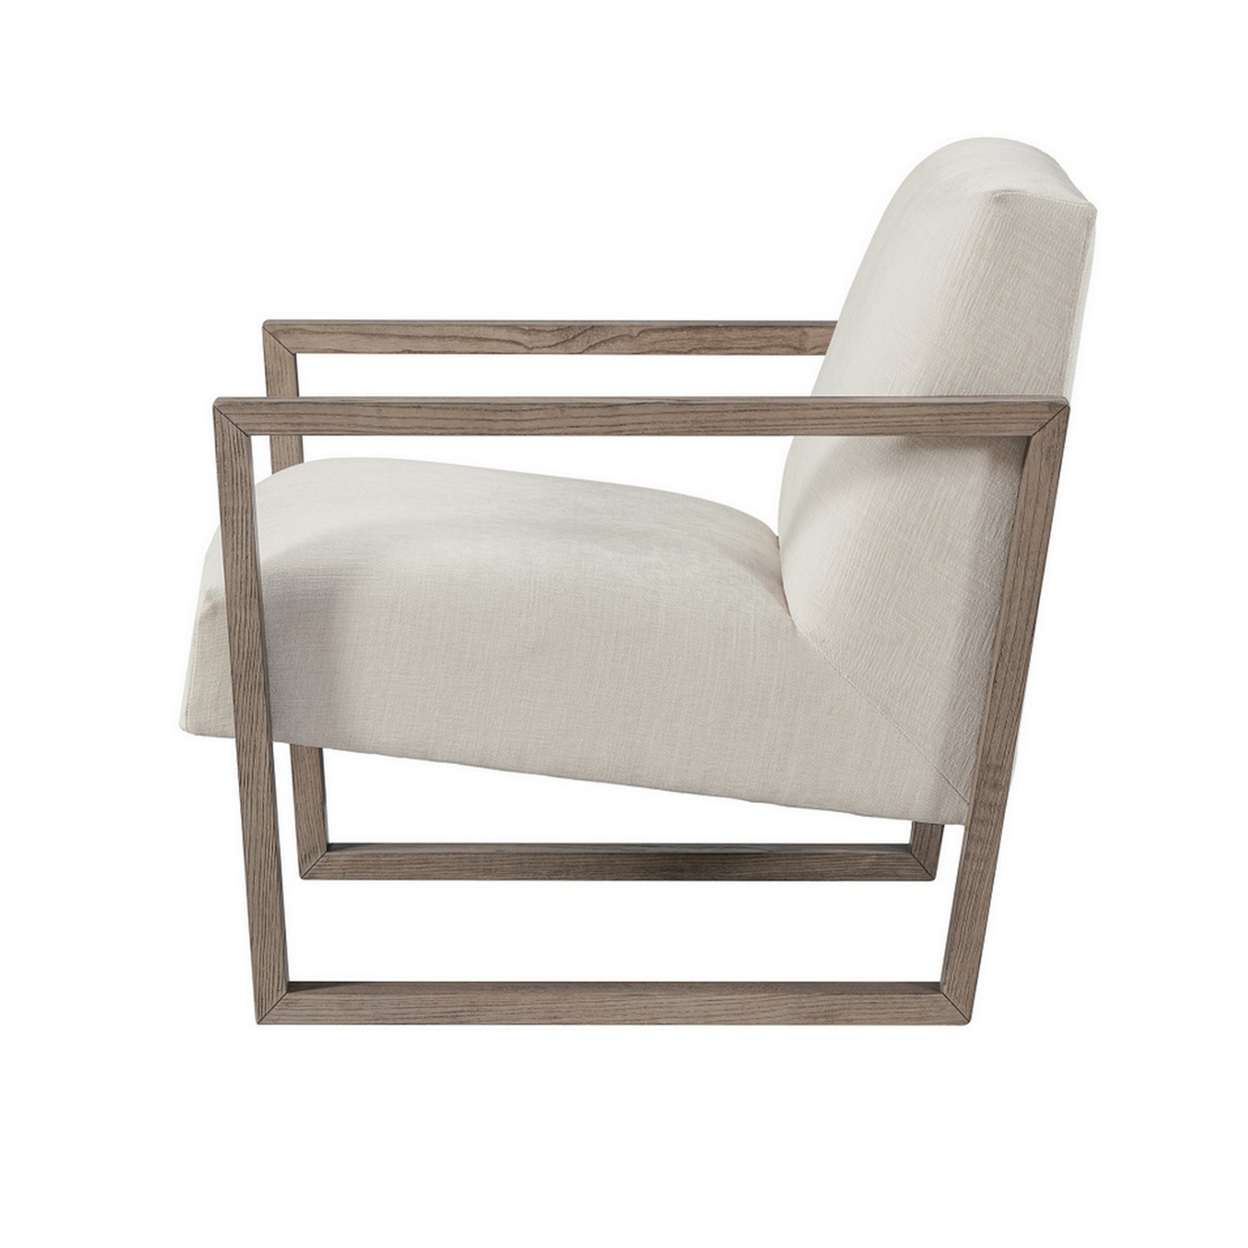 Cvi 31 Inch Armchair, Cushioned Seat, Taupe Framed Legs, Beige Upholstery- Saltoro Sherpi